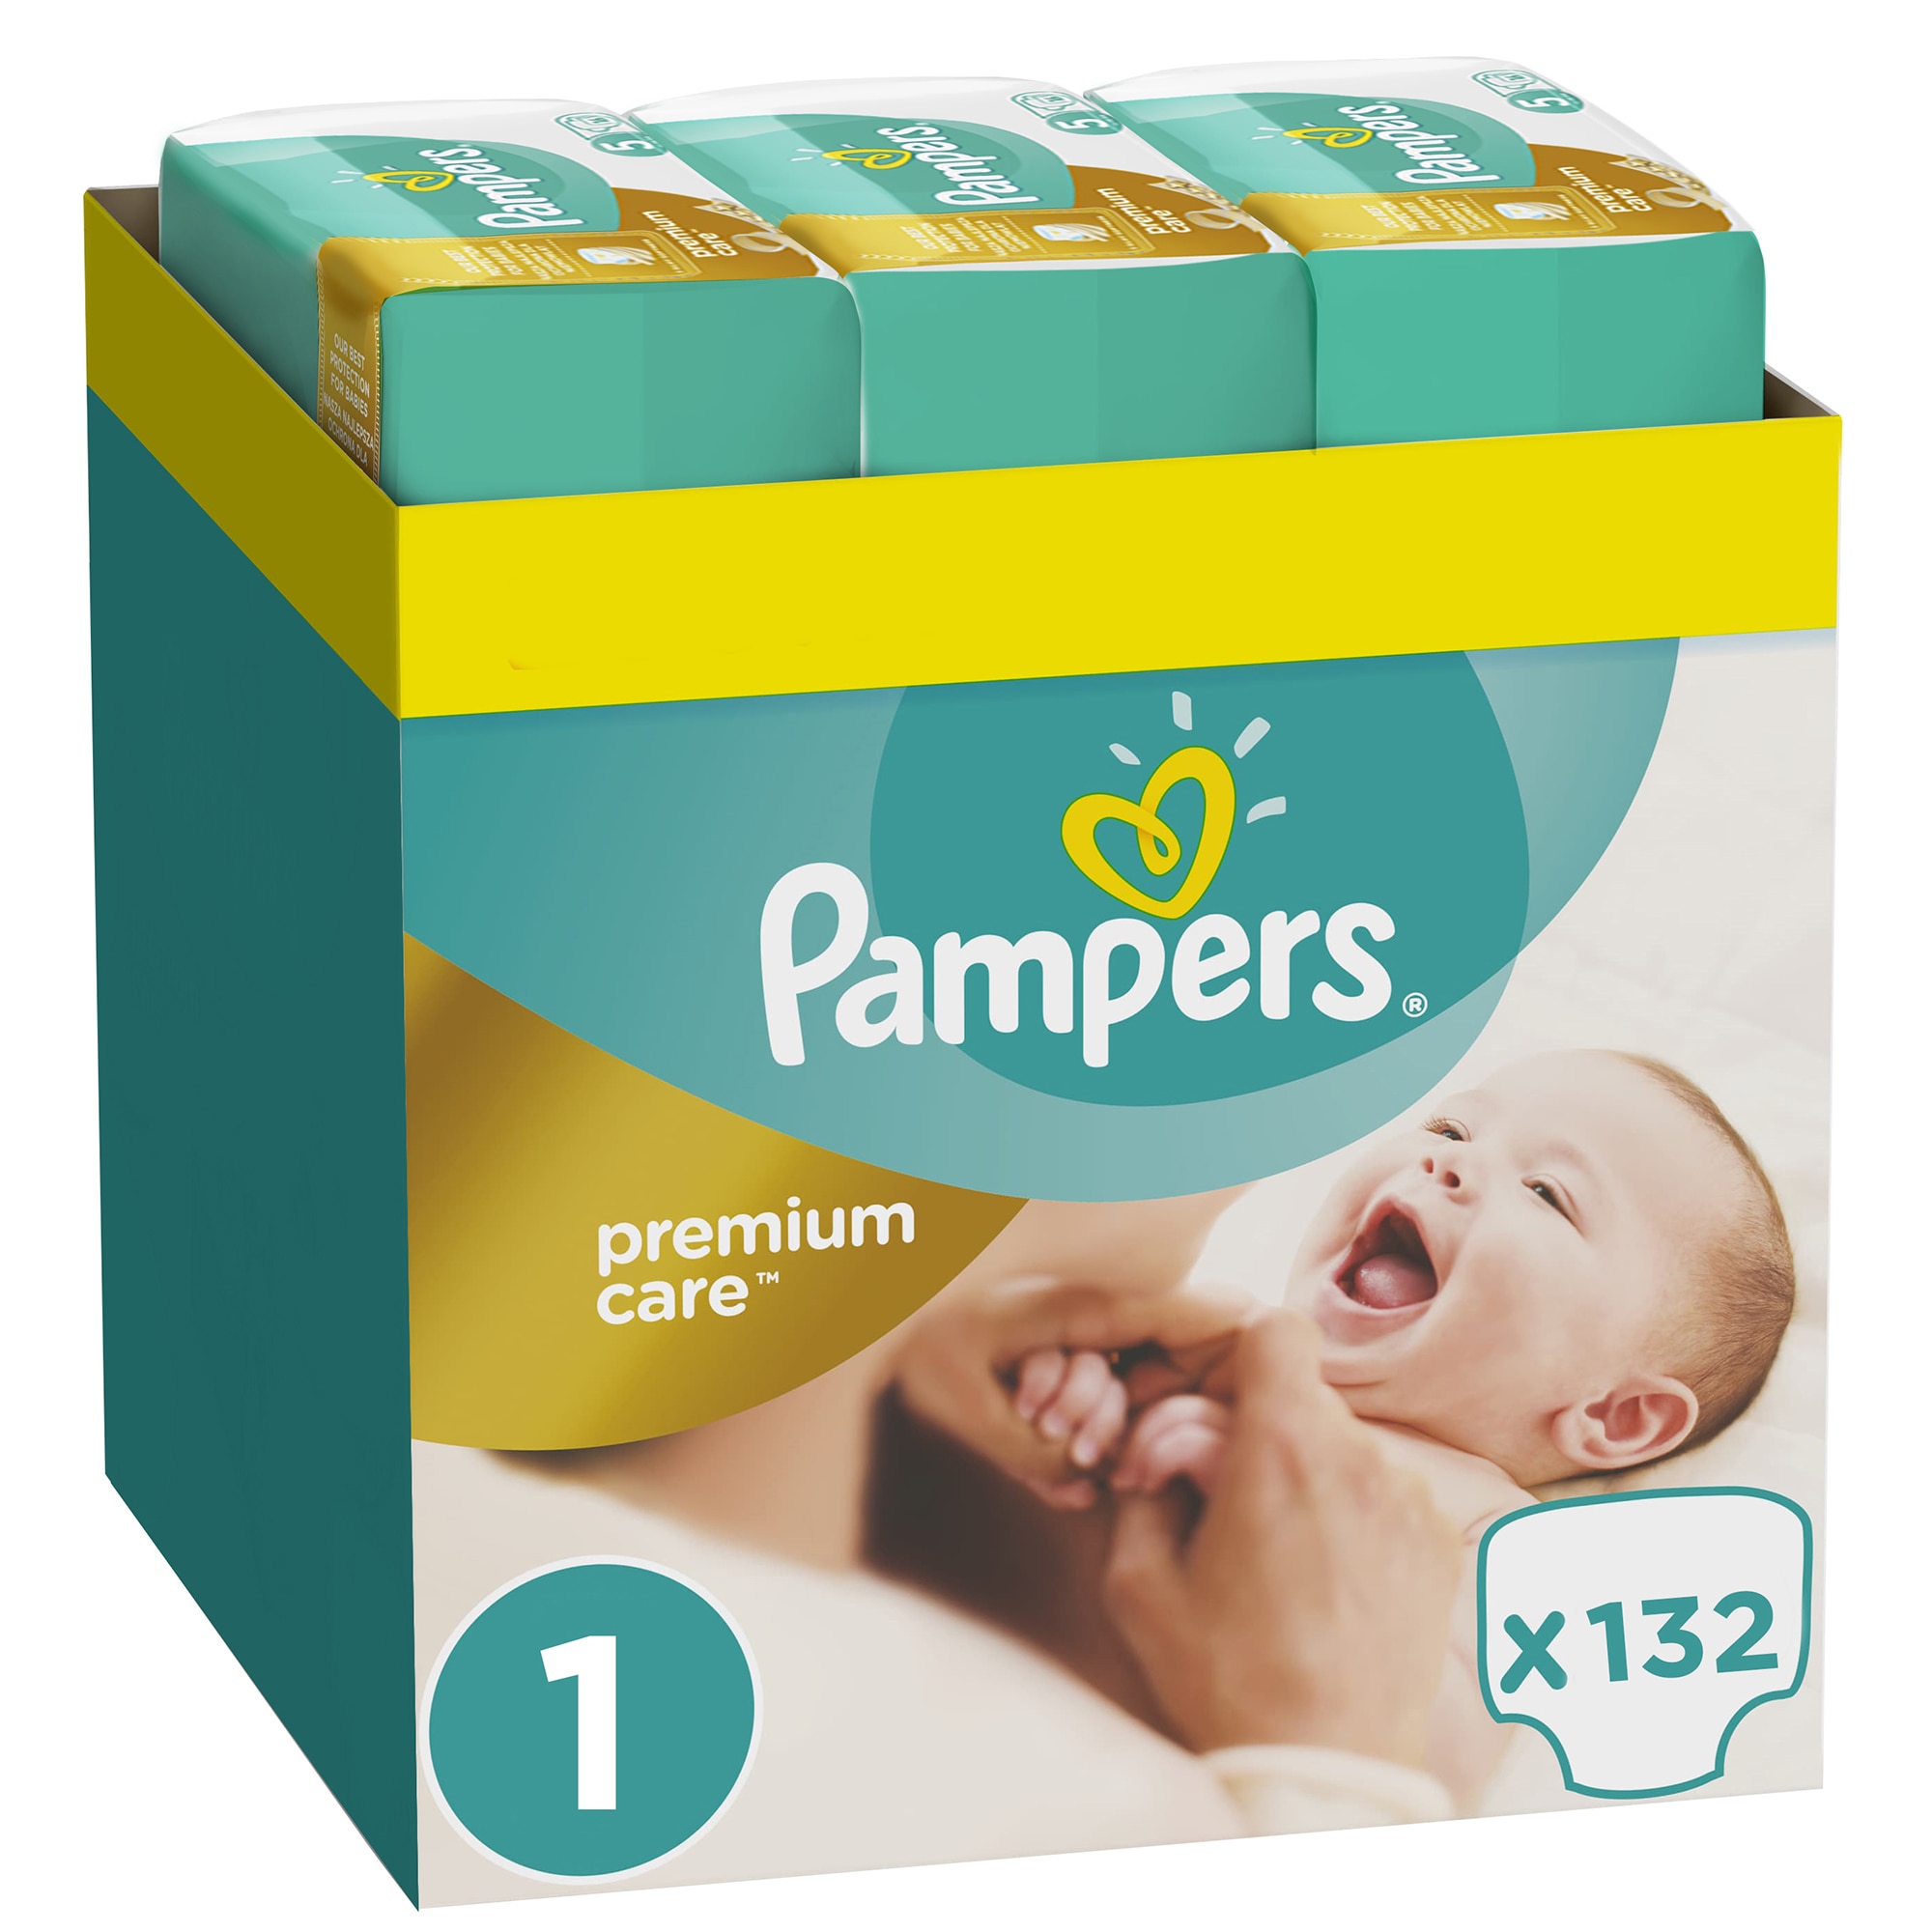 somersault international Want Scutece Pampers Premium Care XXL Box Marimea 1, 2-5 kg, 132 buc - eMAG.ro